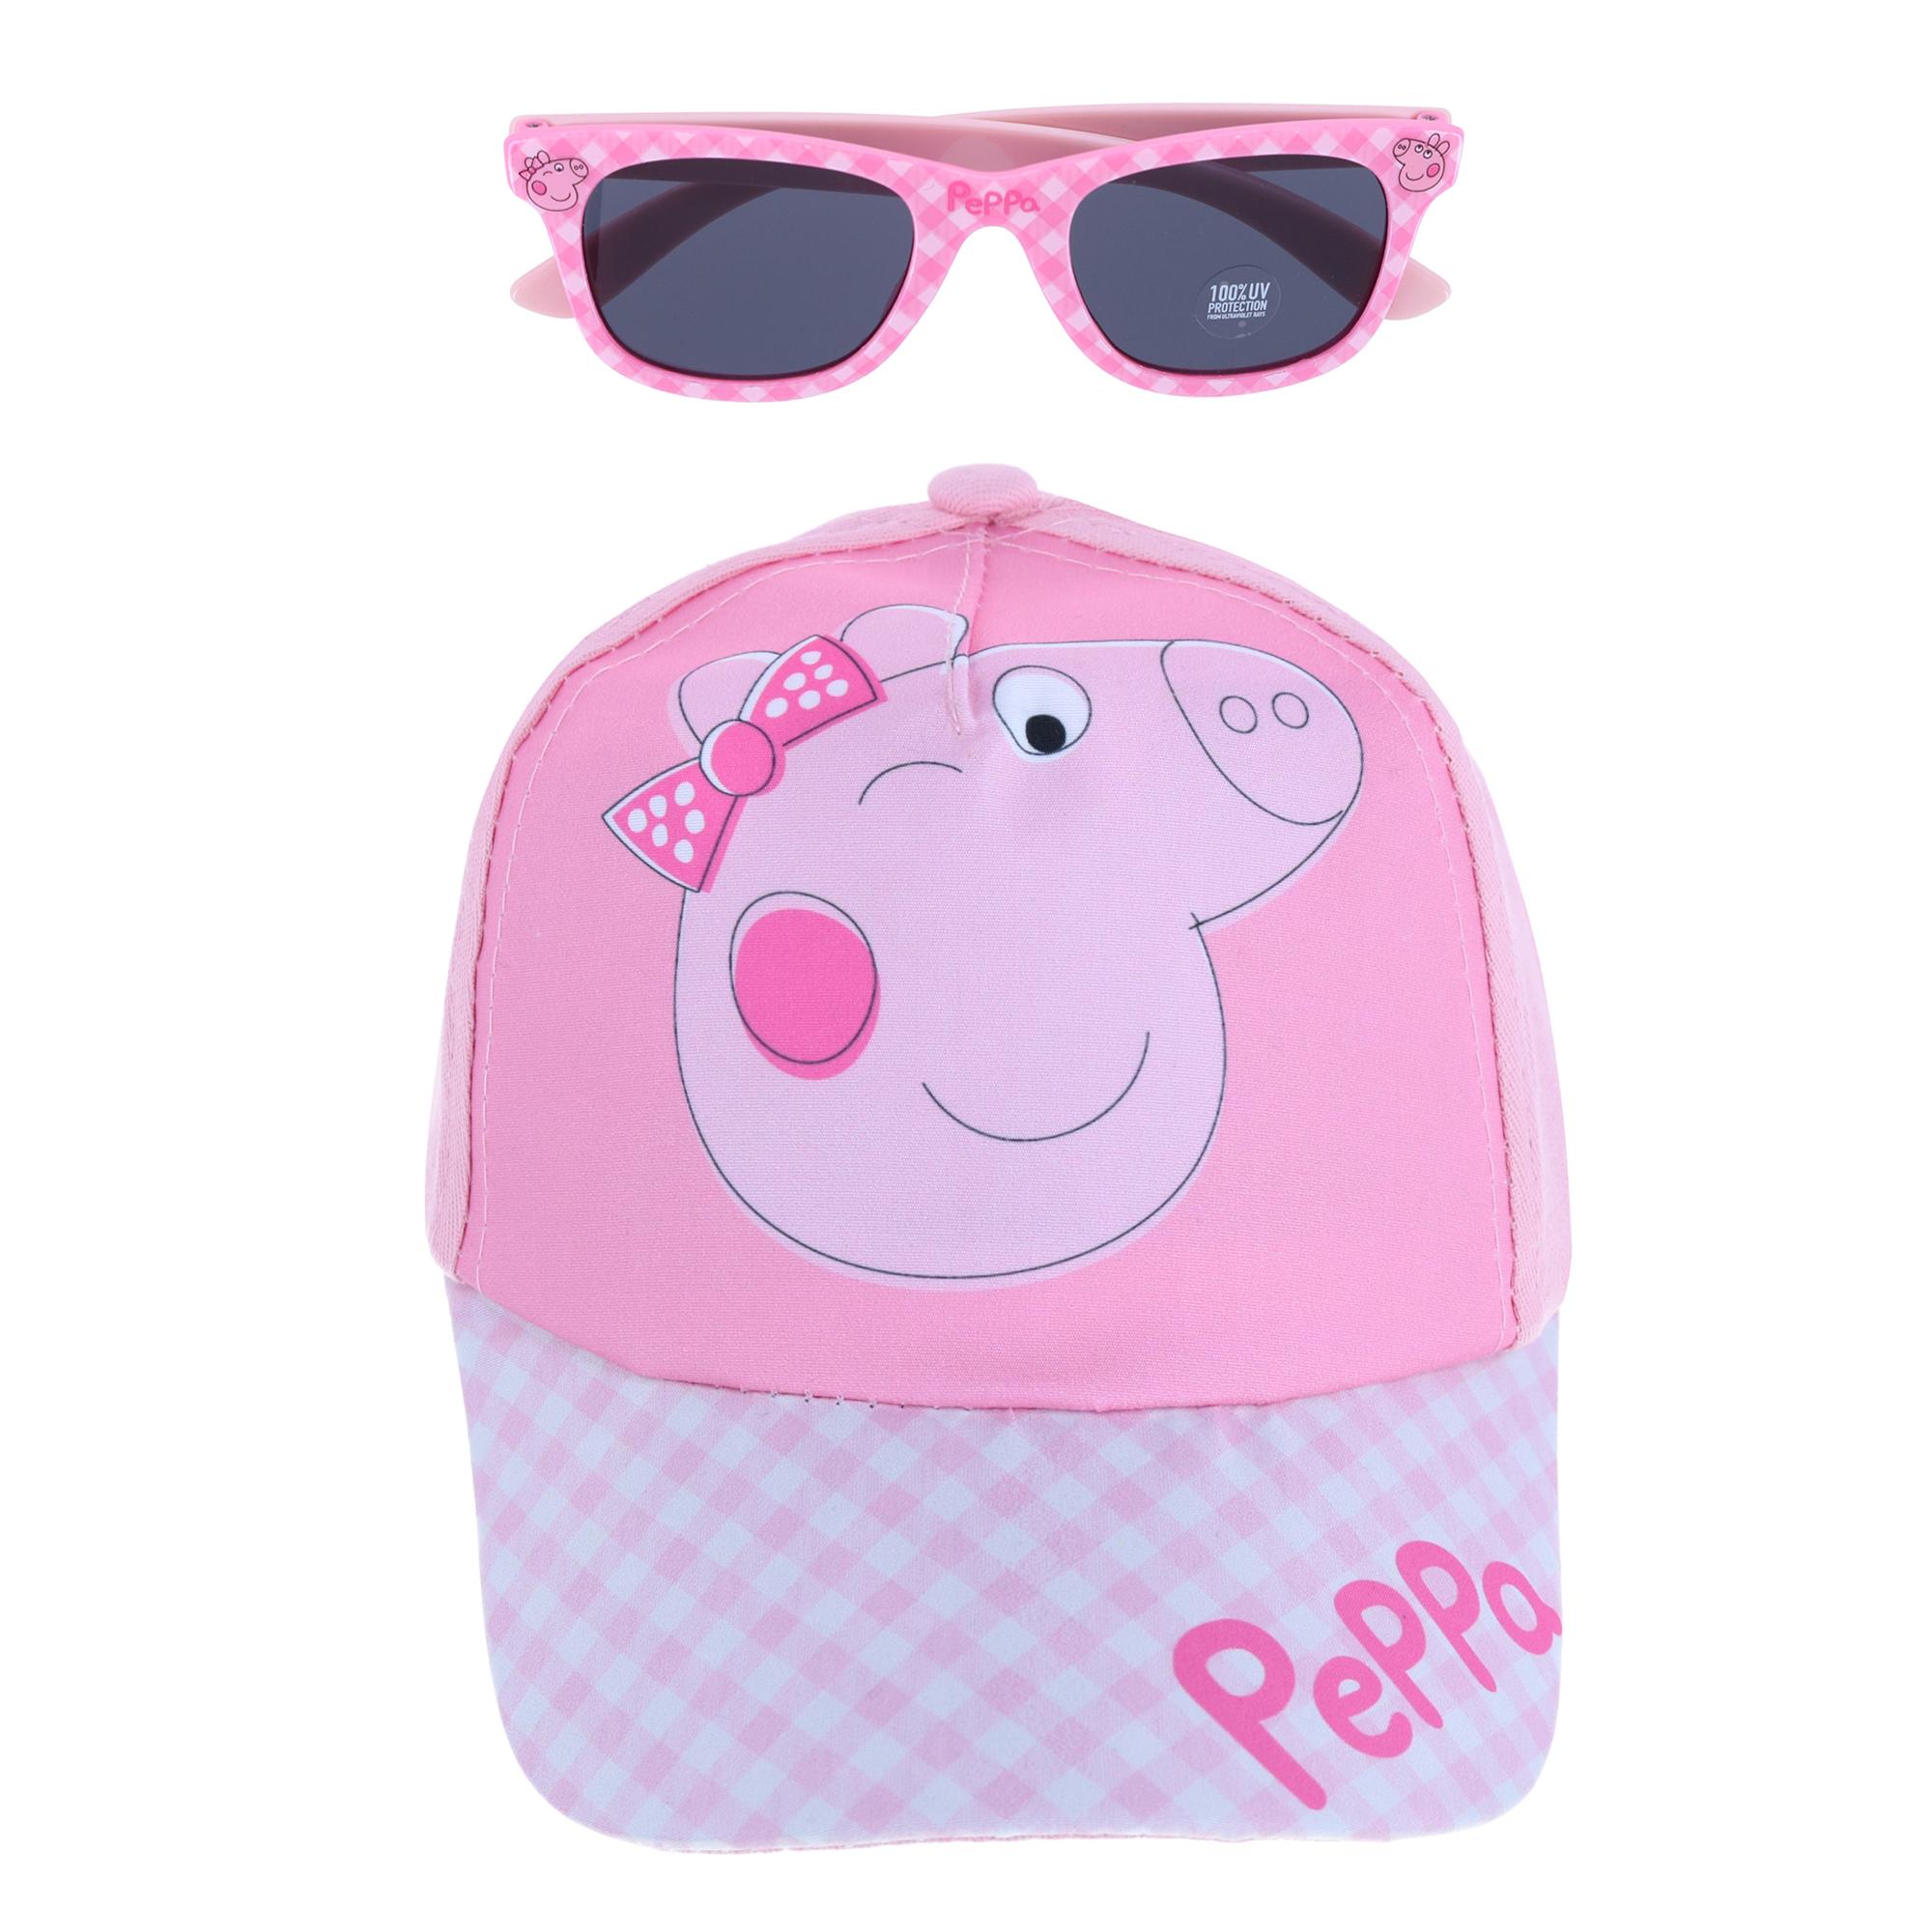 Textiel Trade Girls Peppa Pig Hat and Sunglasses Set